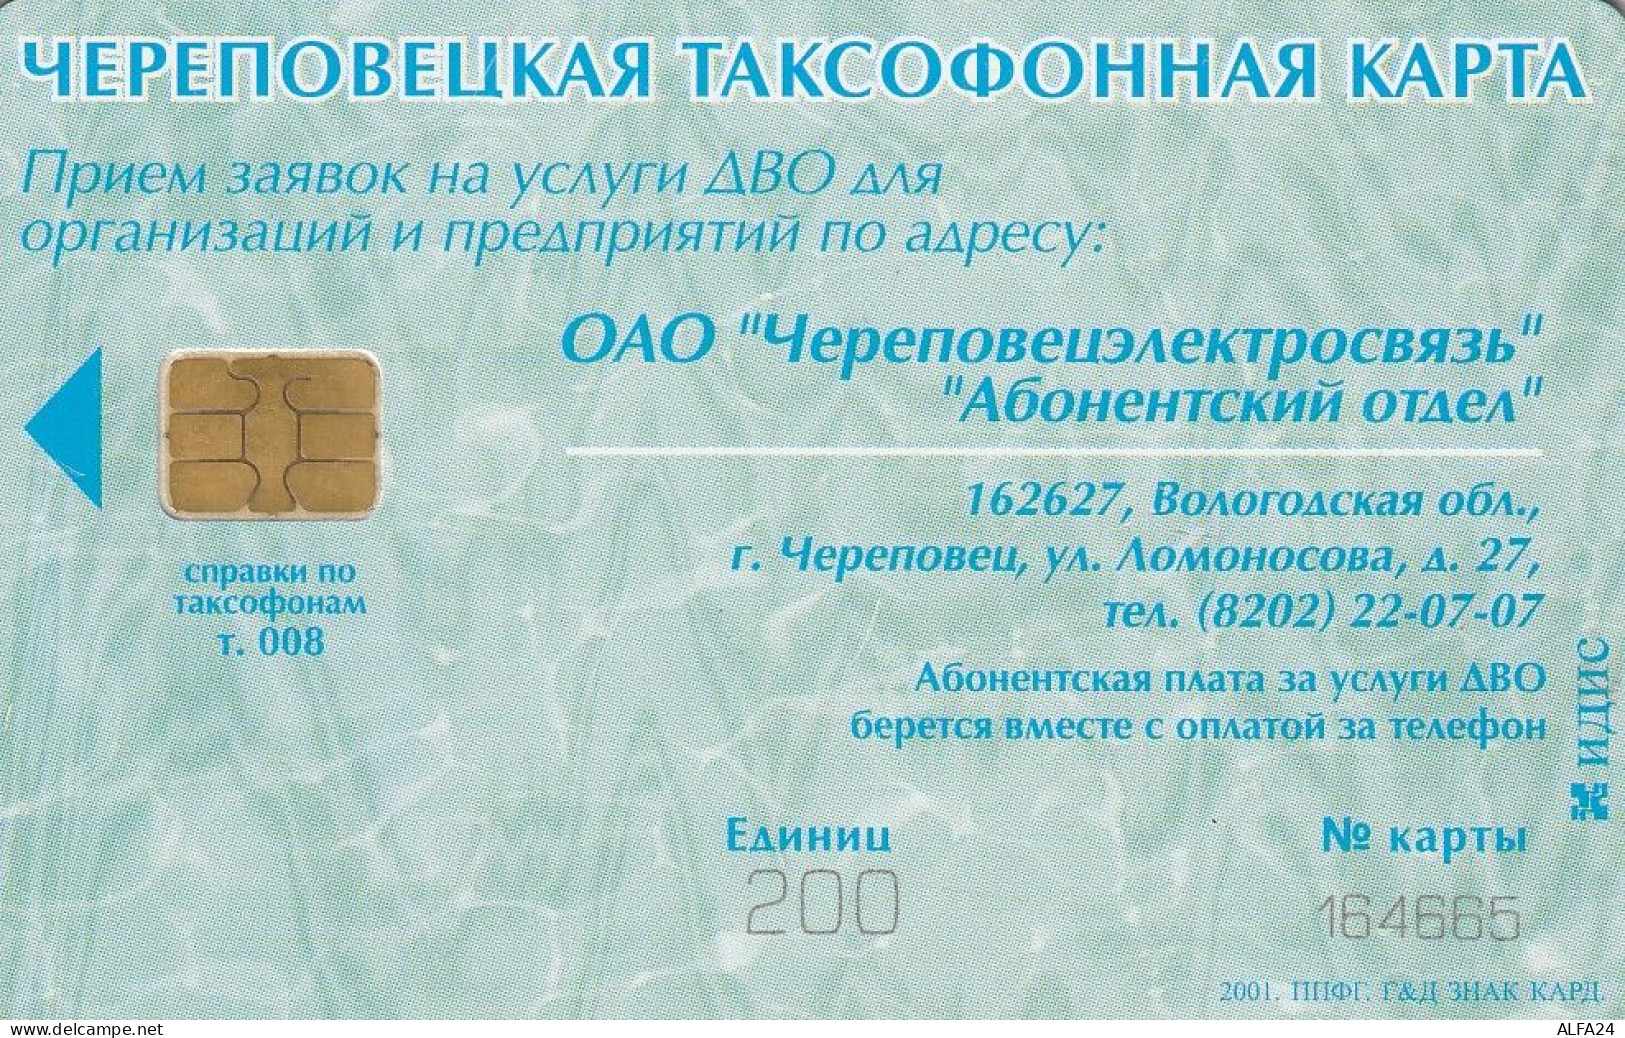 PHONE CARD RUSSIA Cherepovetselektrosvyaz - Cherepovets, Vologda (E9.14.5 - Russia